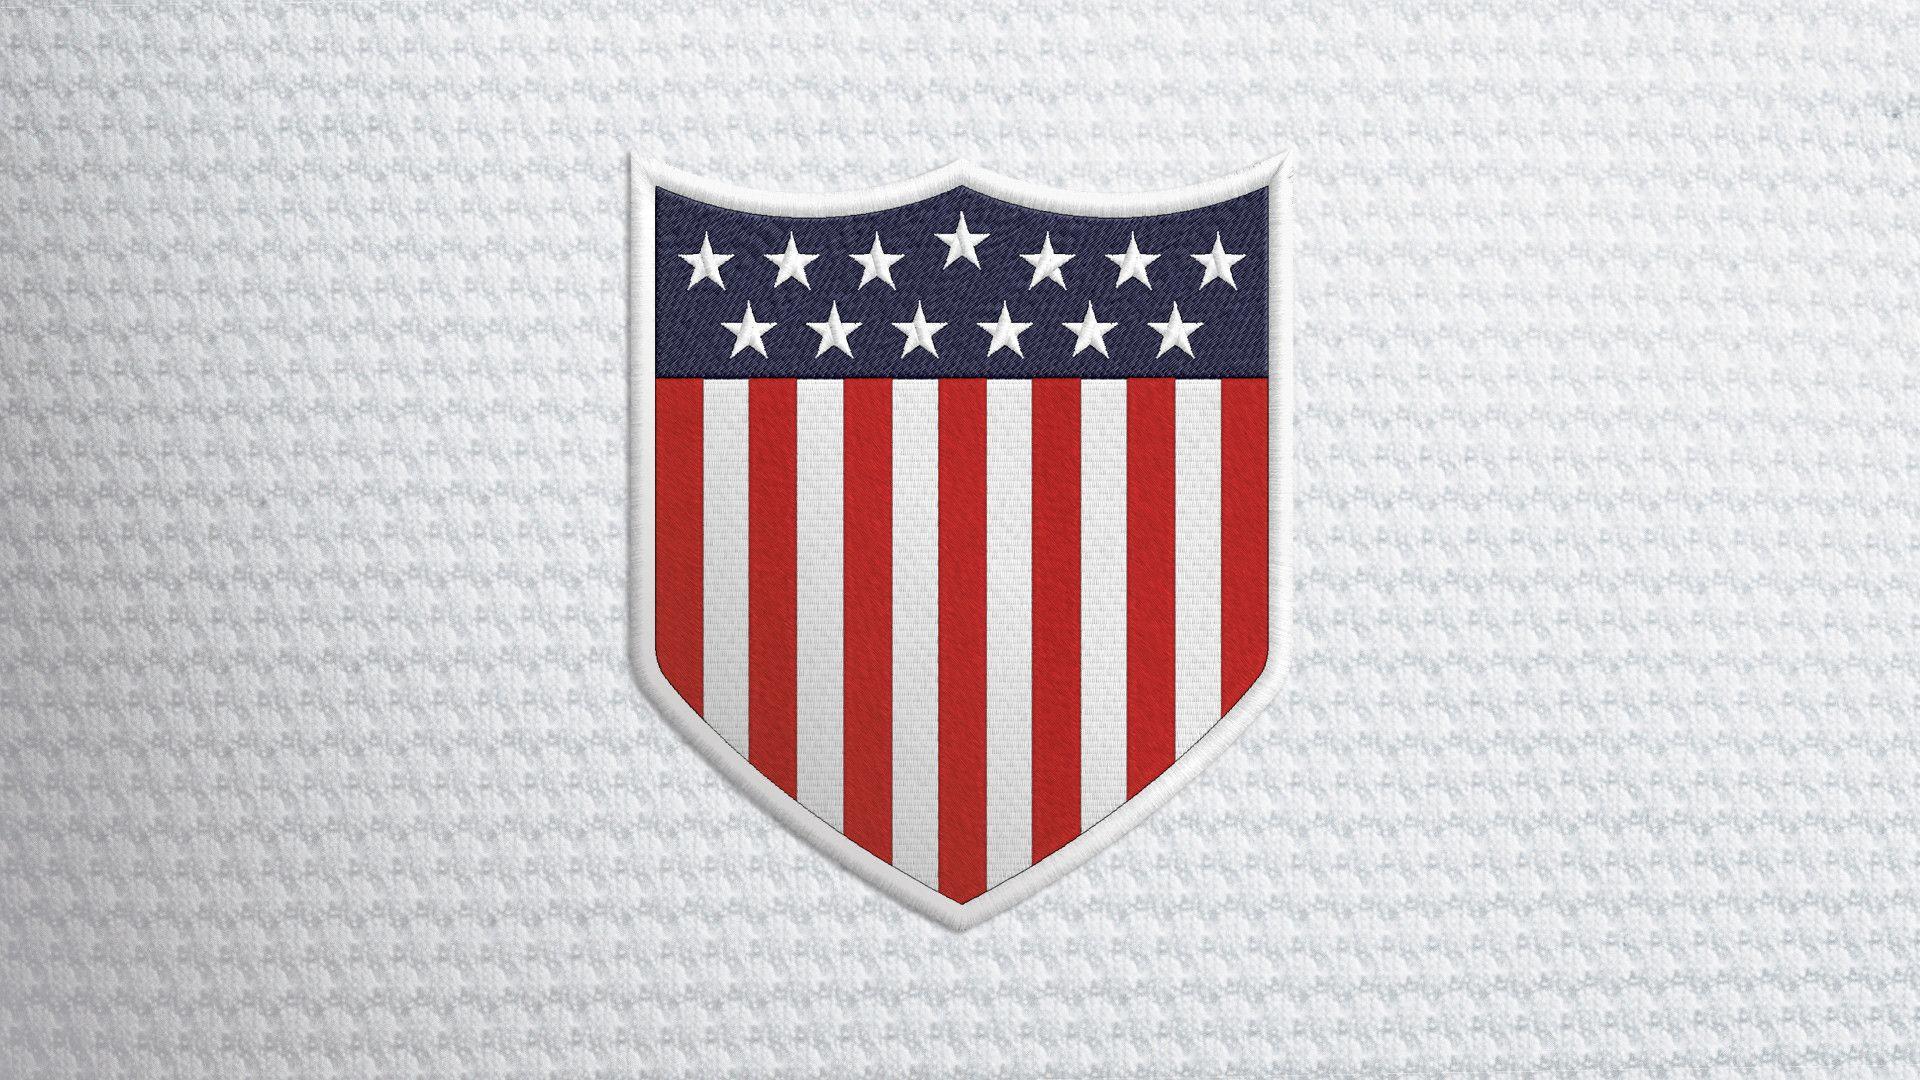 USA Hockey Wallpapers - Top Free USA Hockey Backgrounds - WallpaperAccess